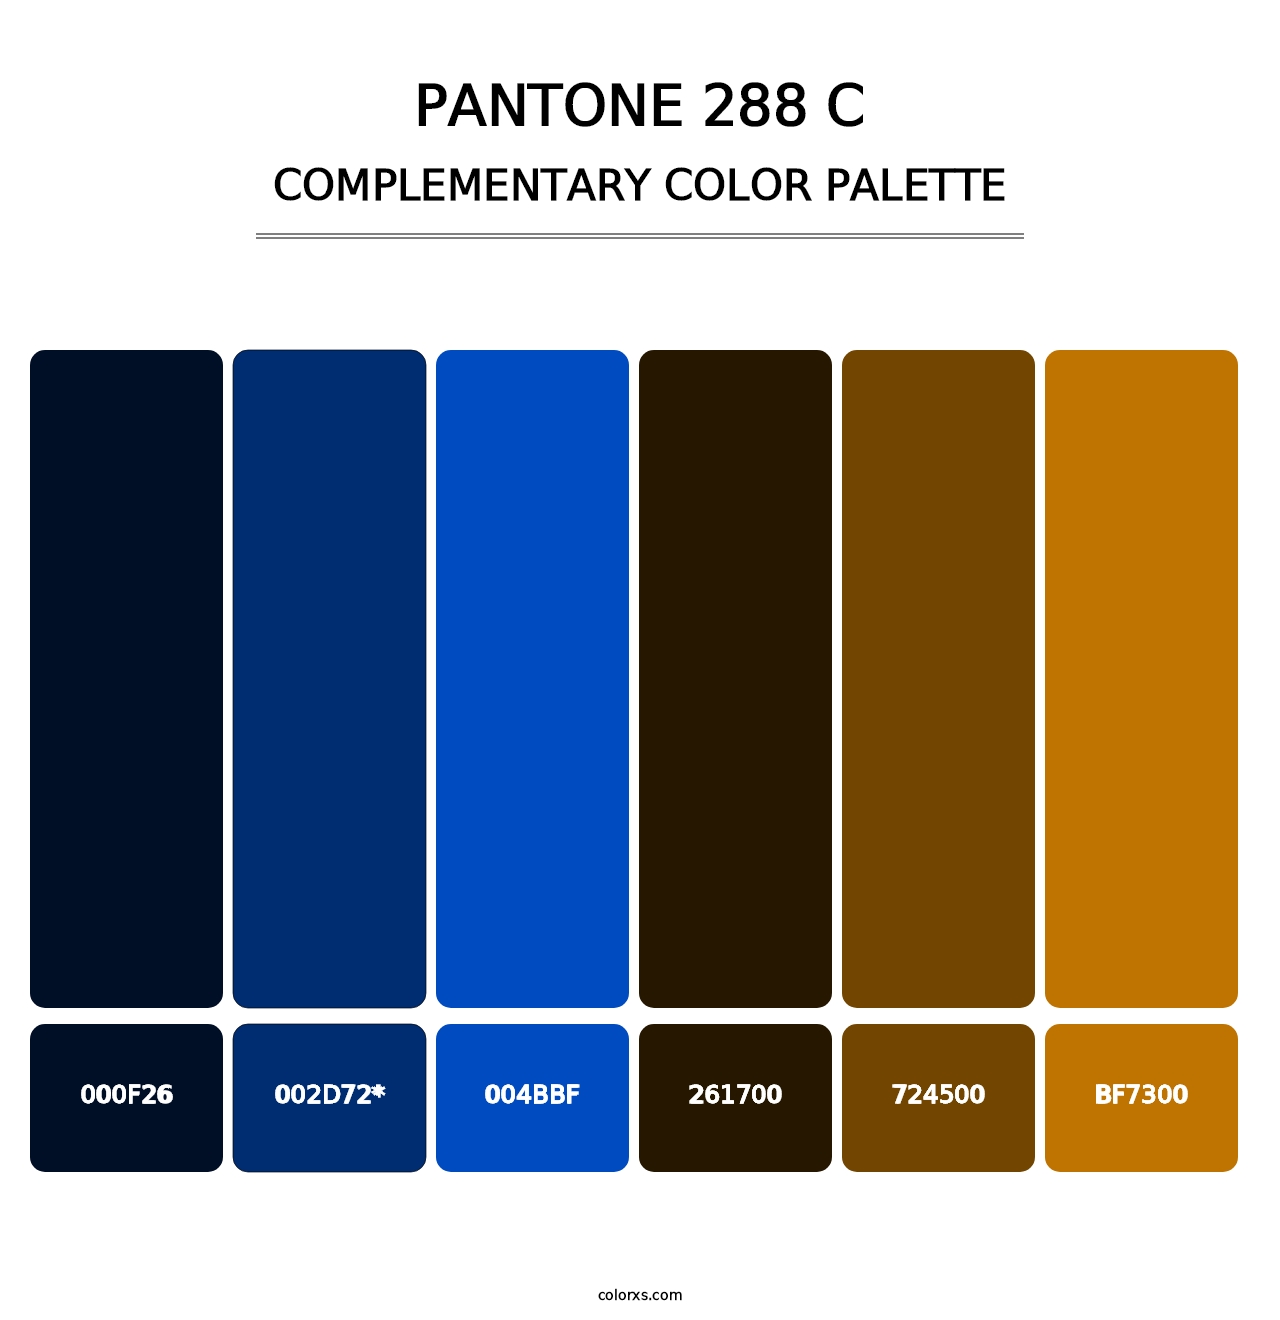 PANTONE 288 C - Complementary Color Palette